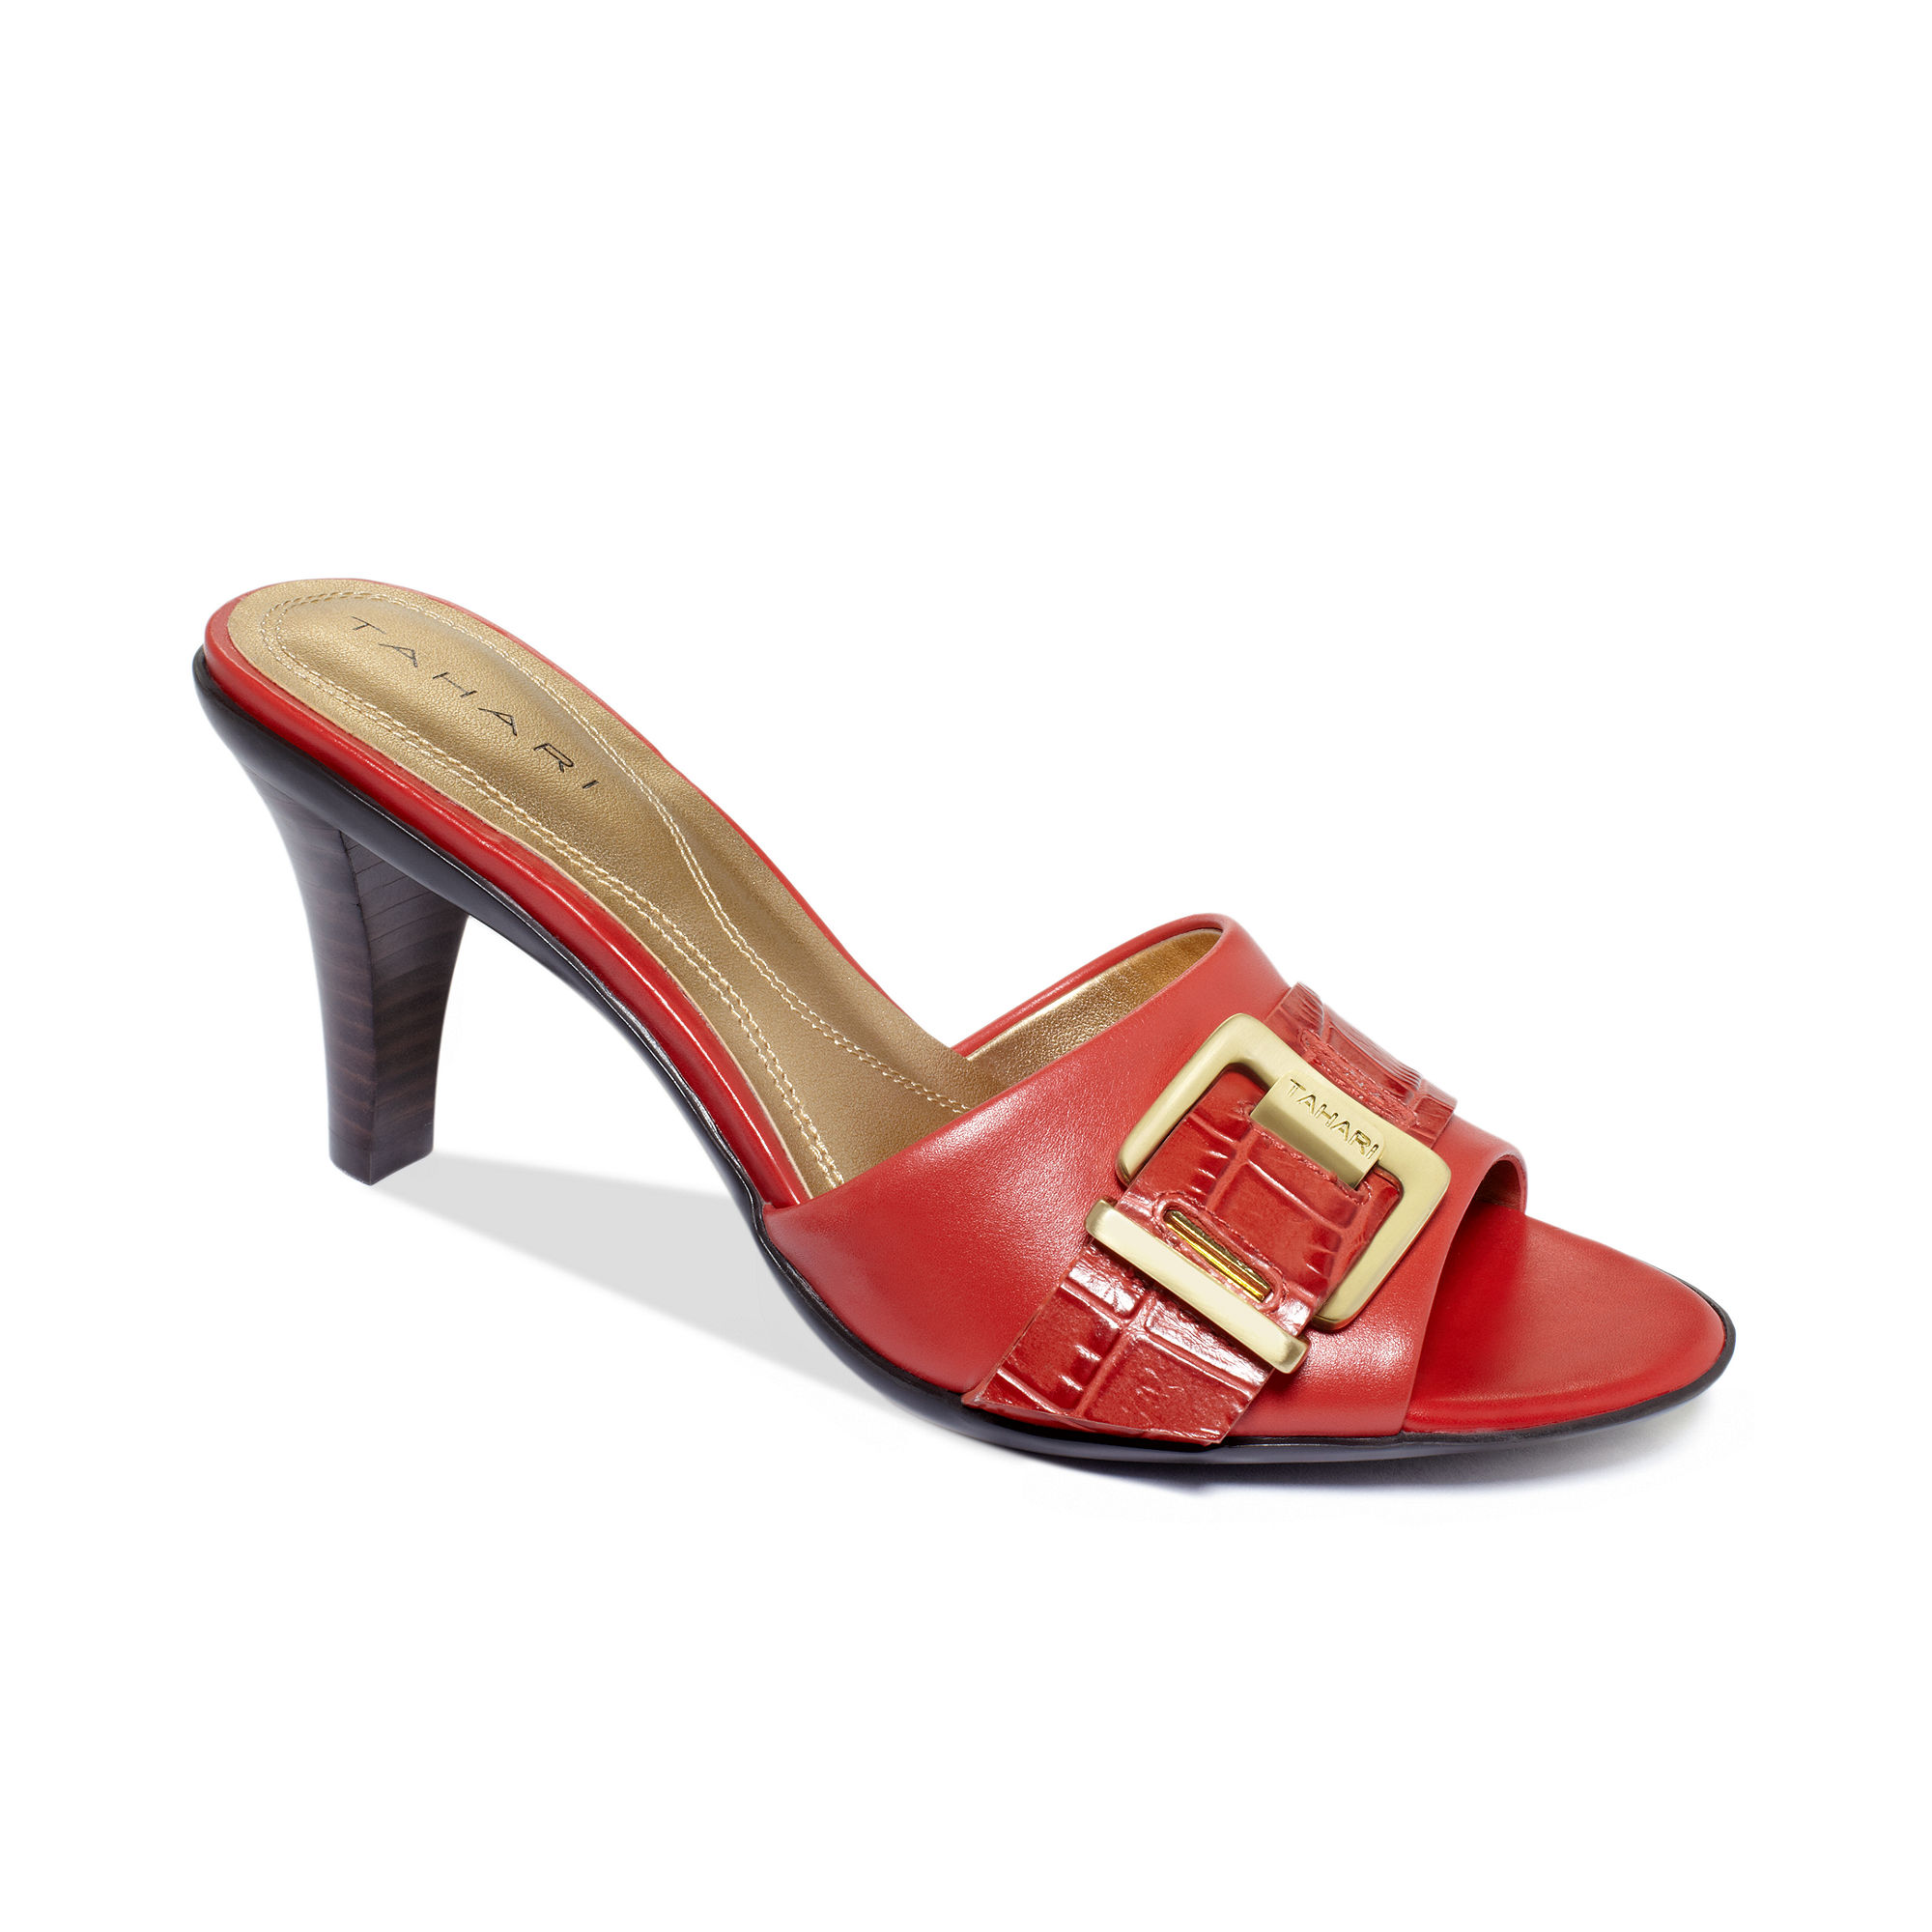 ... heel. Imported. Leather upper. Round open-toe mid-heel mule sandals. 3